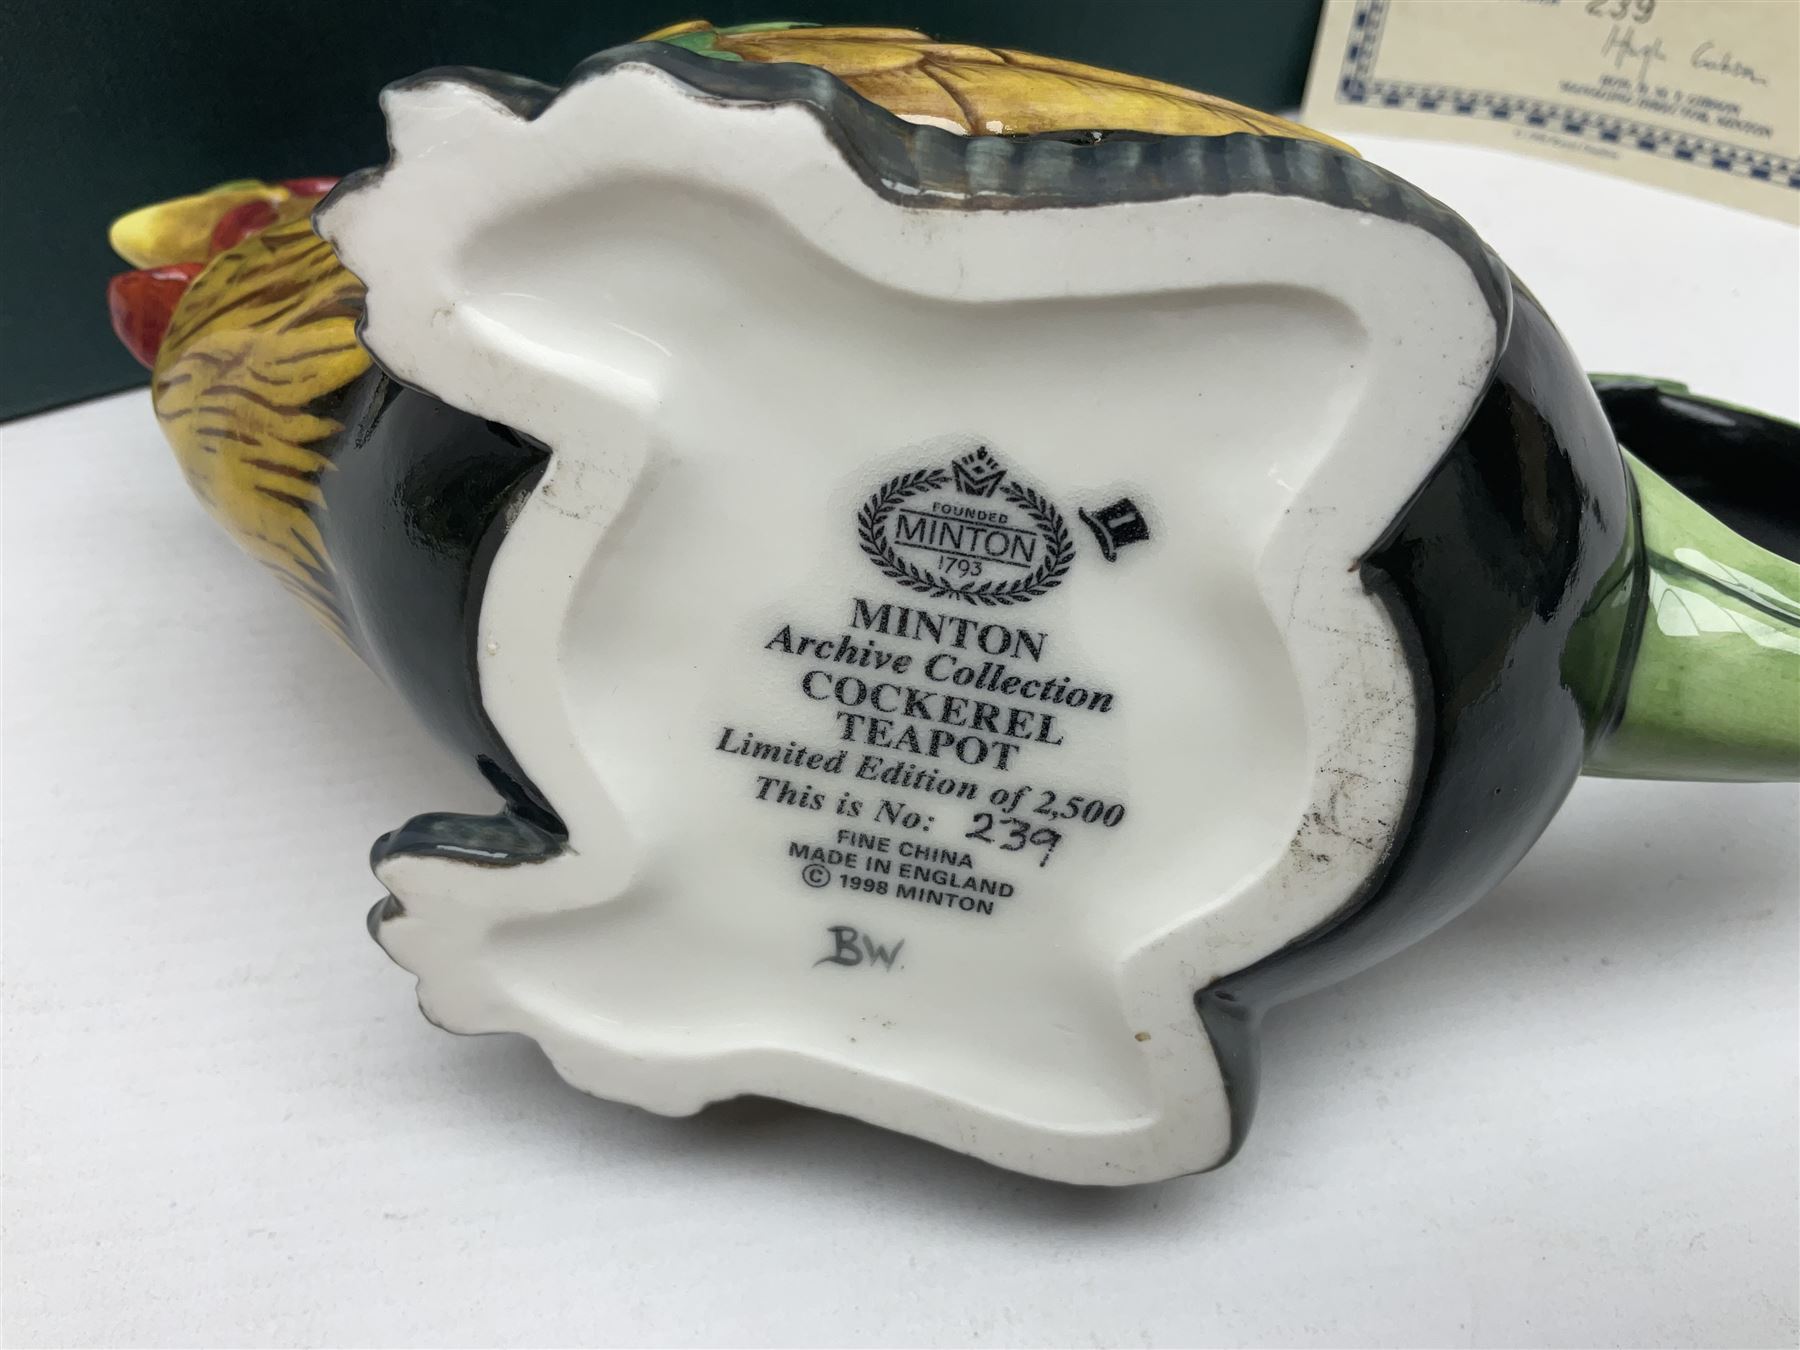 Minton Archive collection cockerel teapot - Image 11 of 12